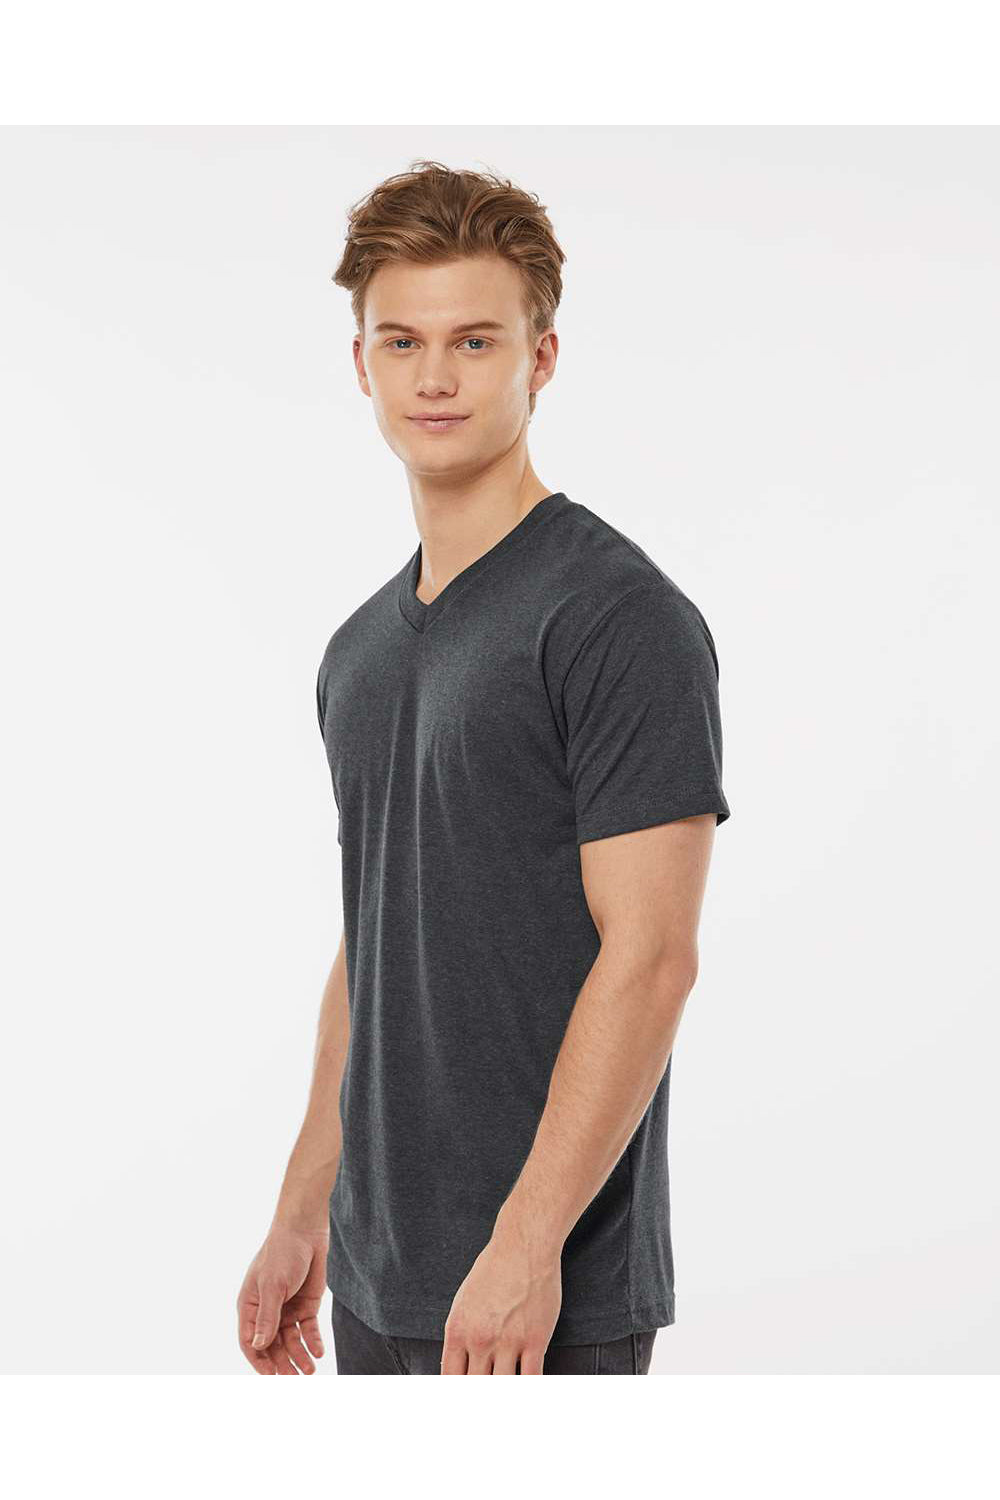 Tultex 207 Mens Poly-Rich Short Sleeve V-Neck T-Shirt Heather Charcoal Grey Model Side